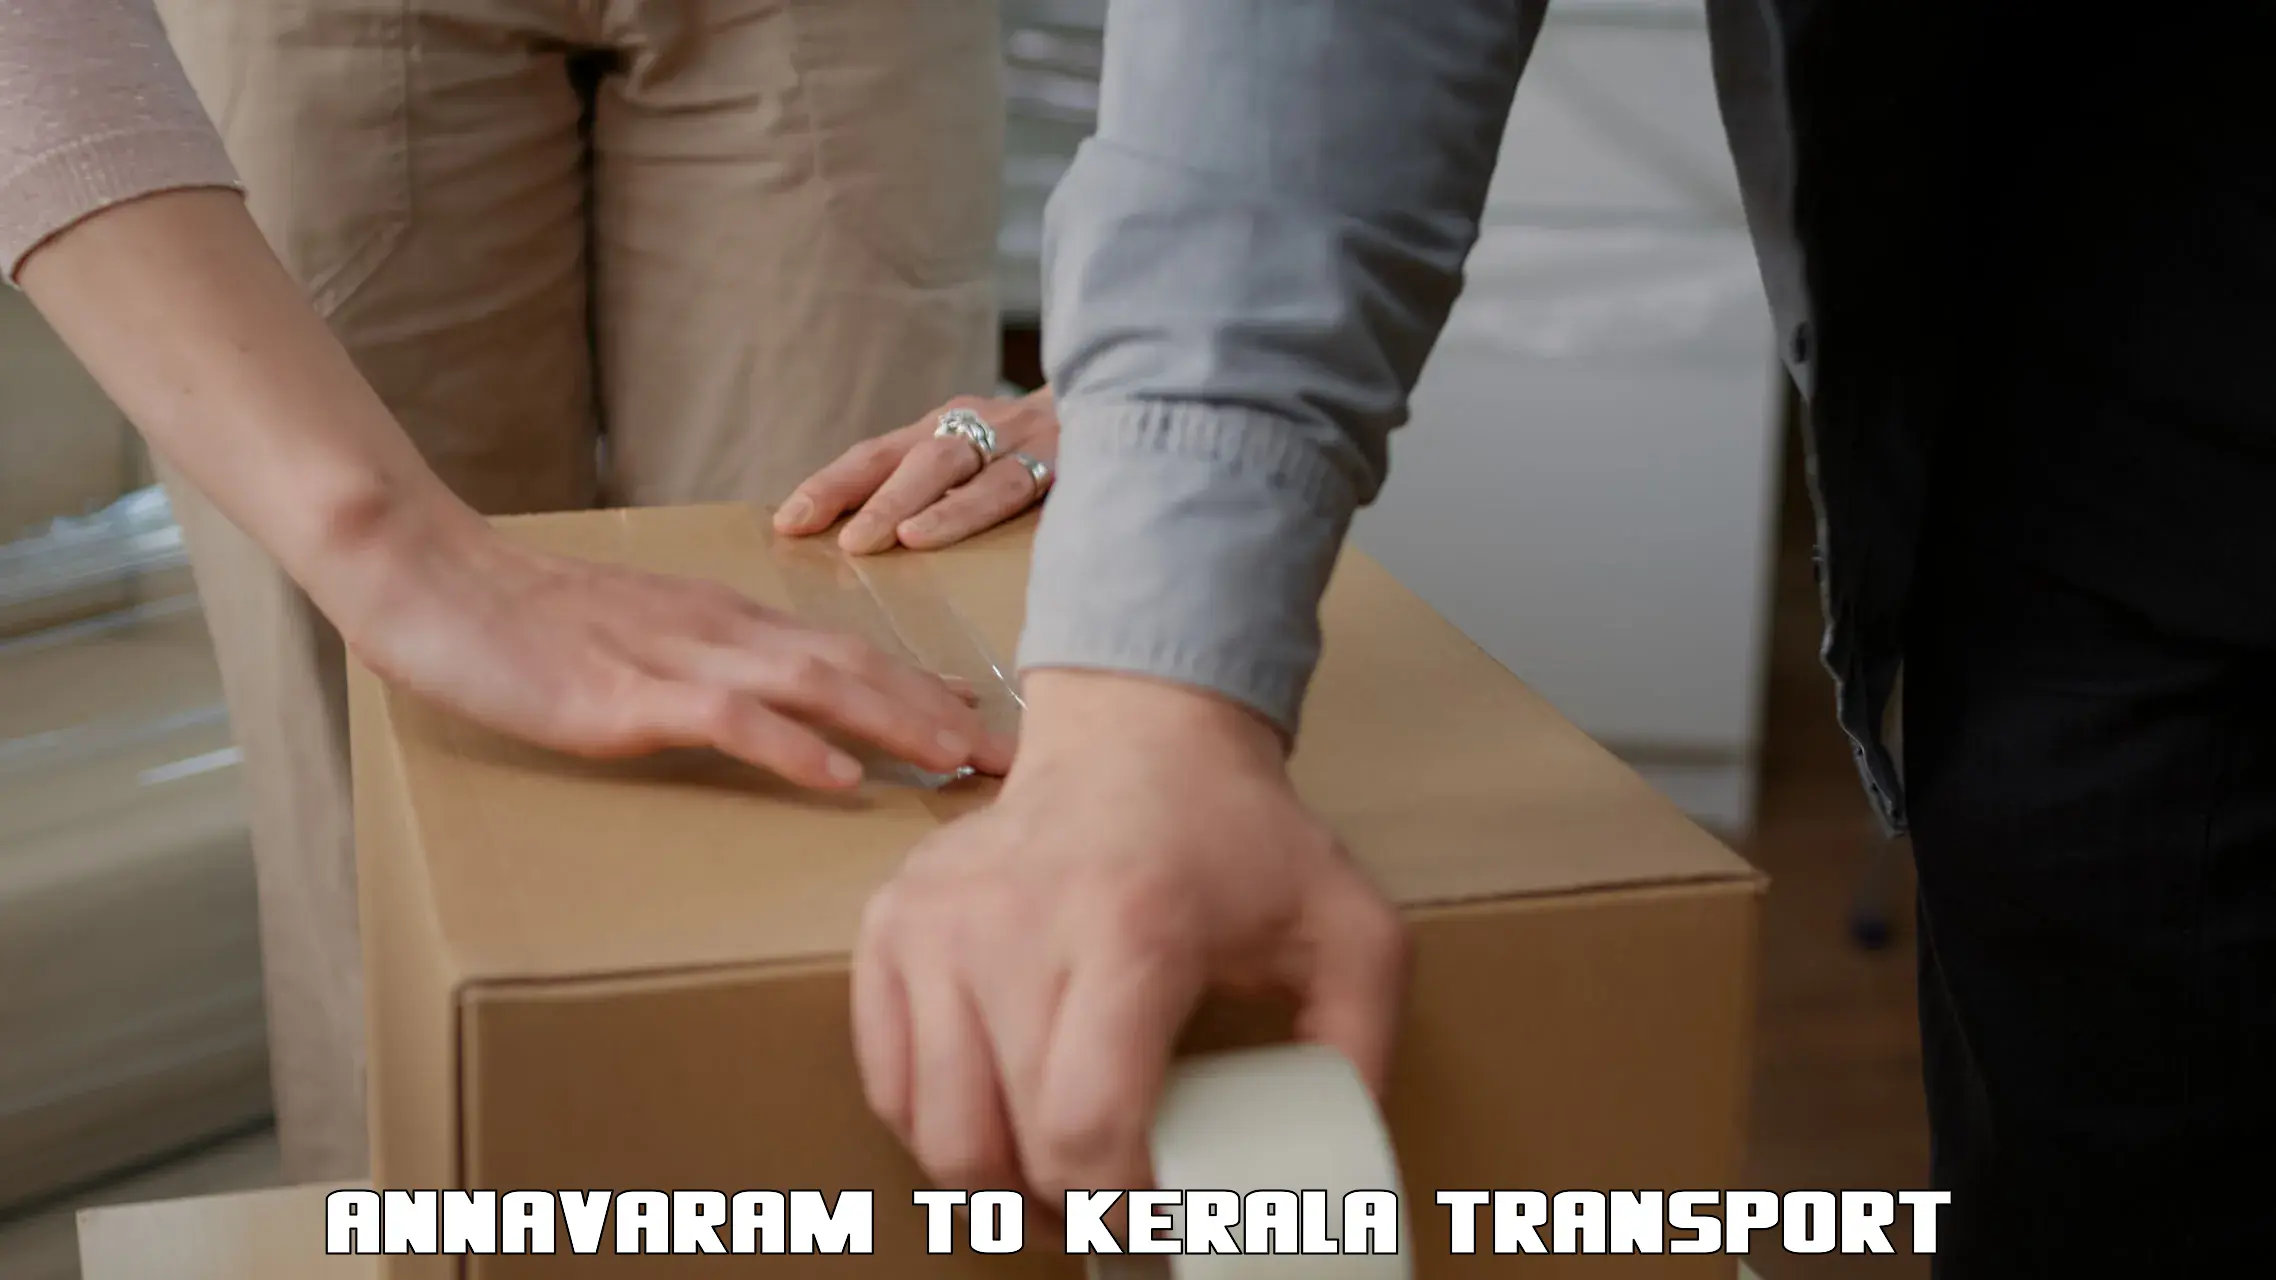 Transport in sharing Annavaram to Ramankary